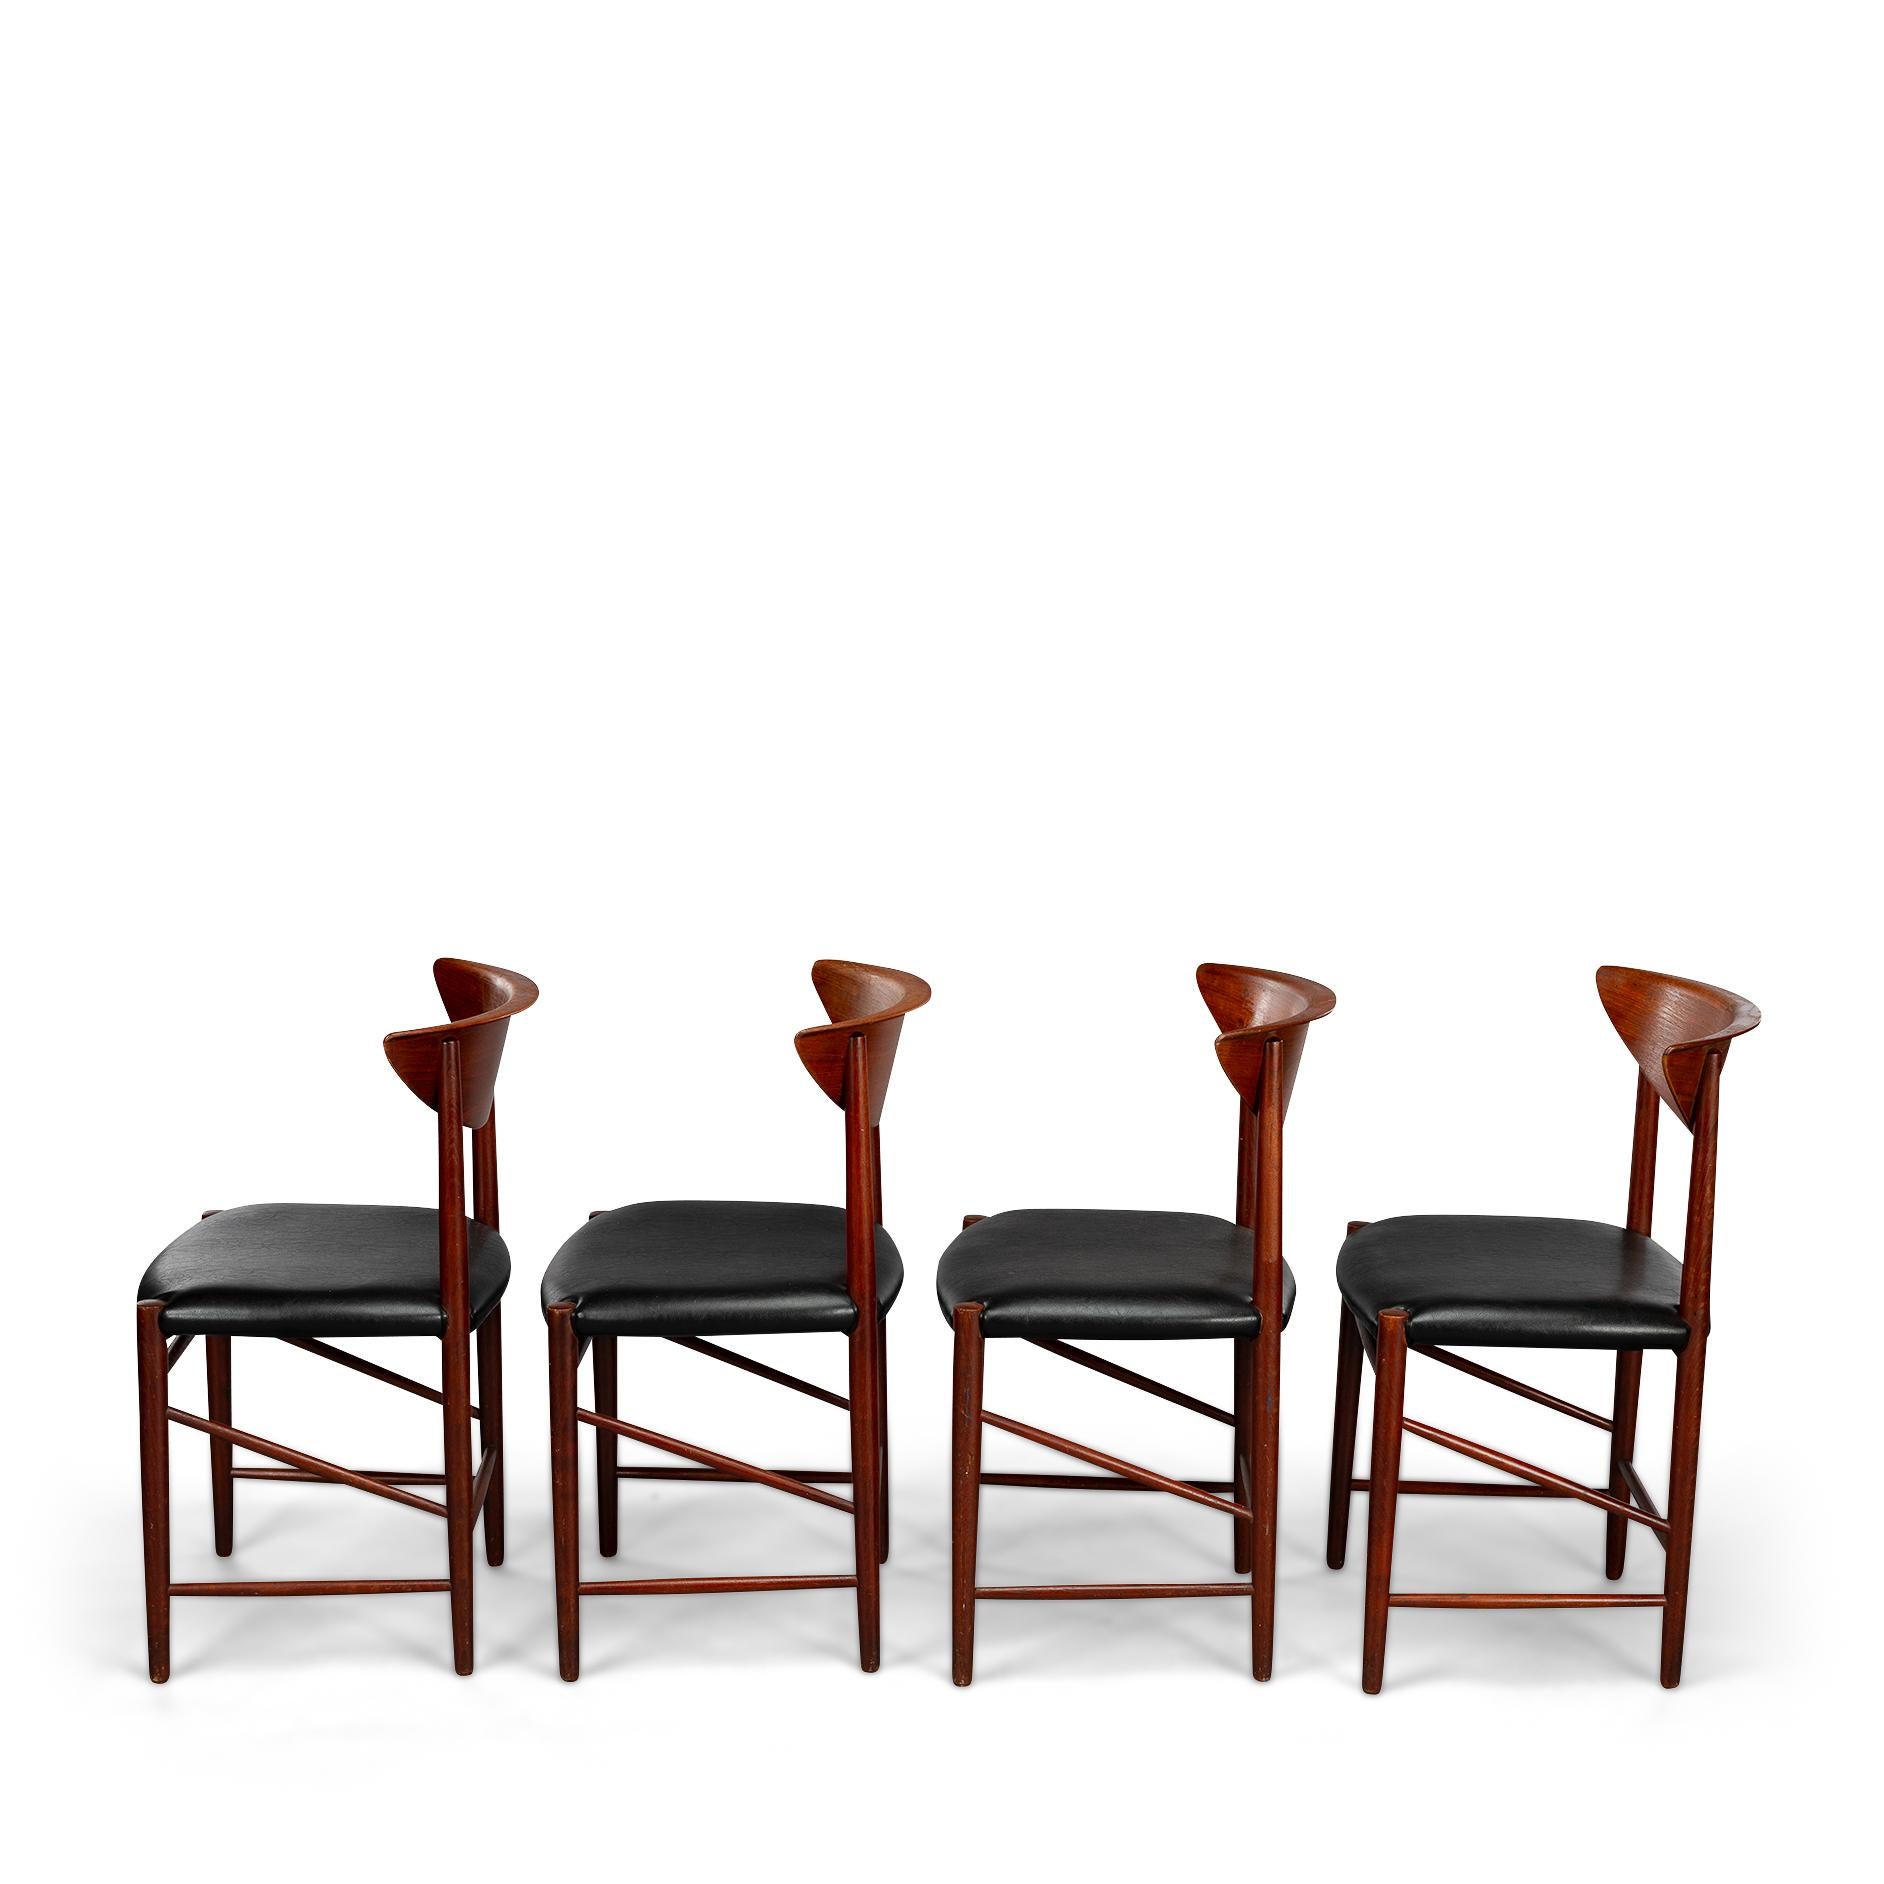 Faux Leather Reupholstered Teak Chair Model # 317 by Peter Hvidt for Soborg Mobel, Set of 4 For Sale